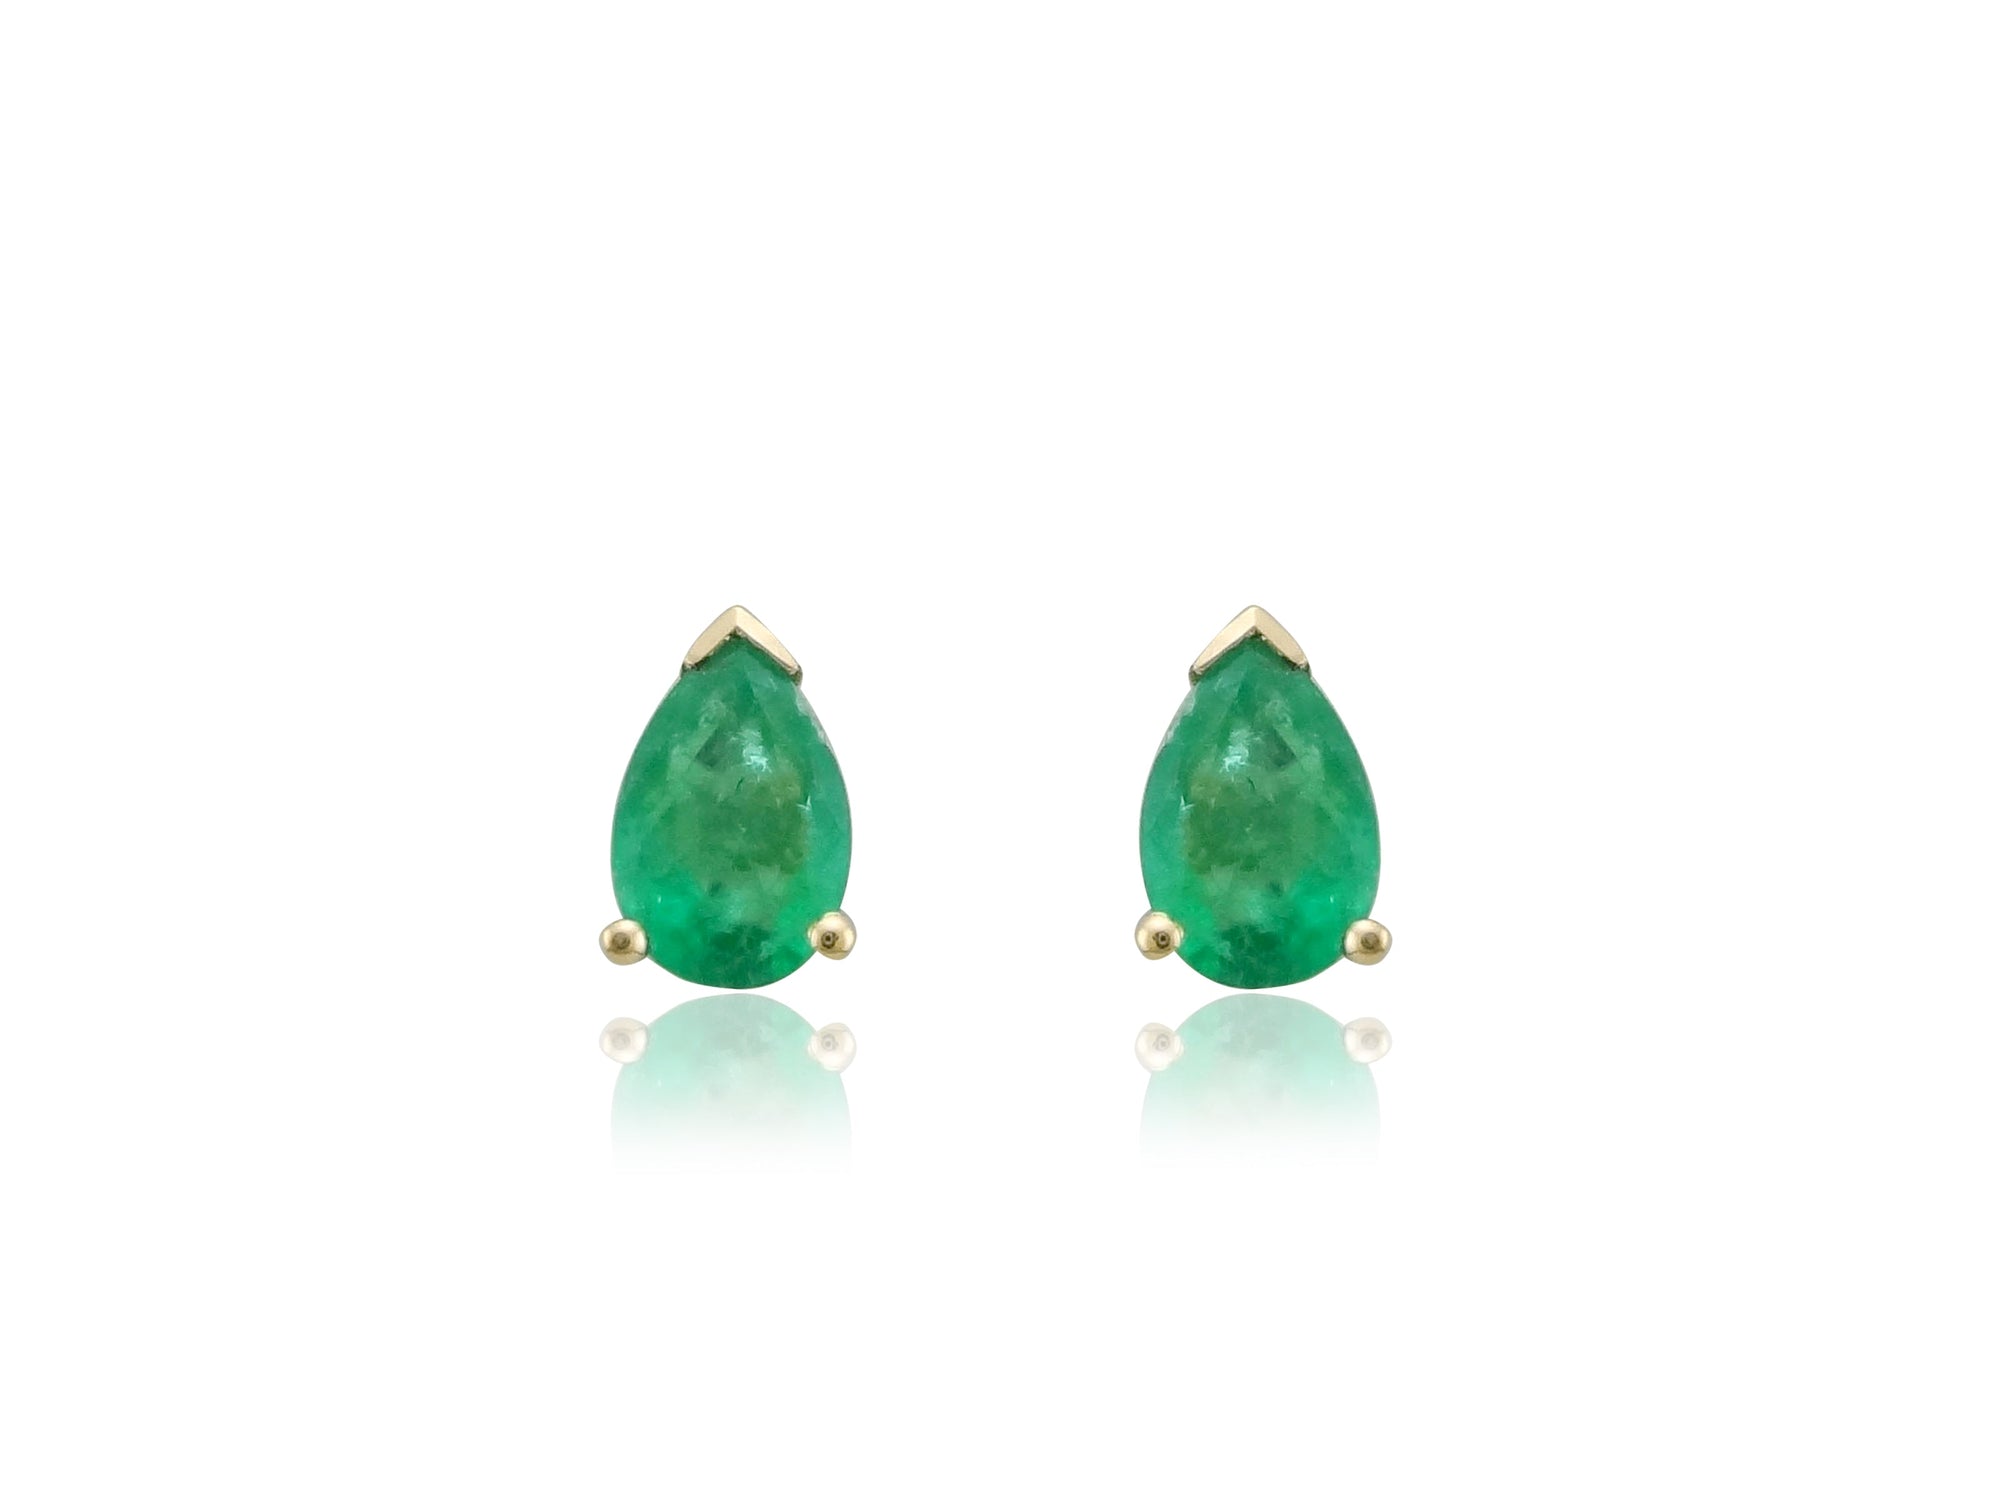 9ct gold 6x4mm pear shape emerald stud earrings